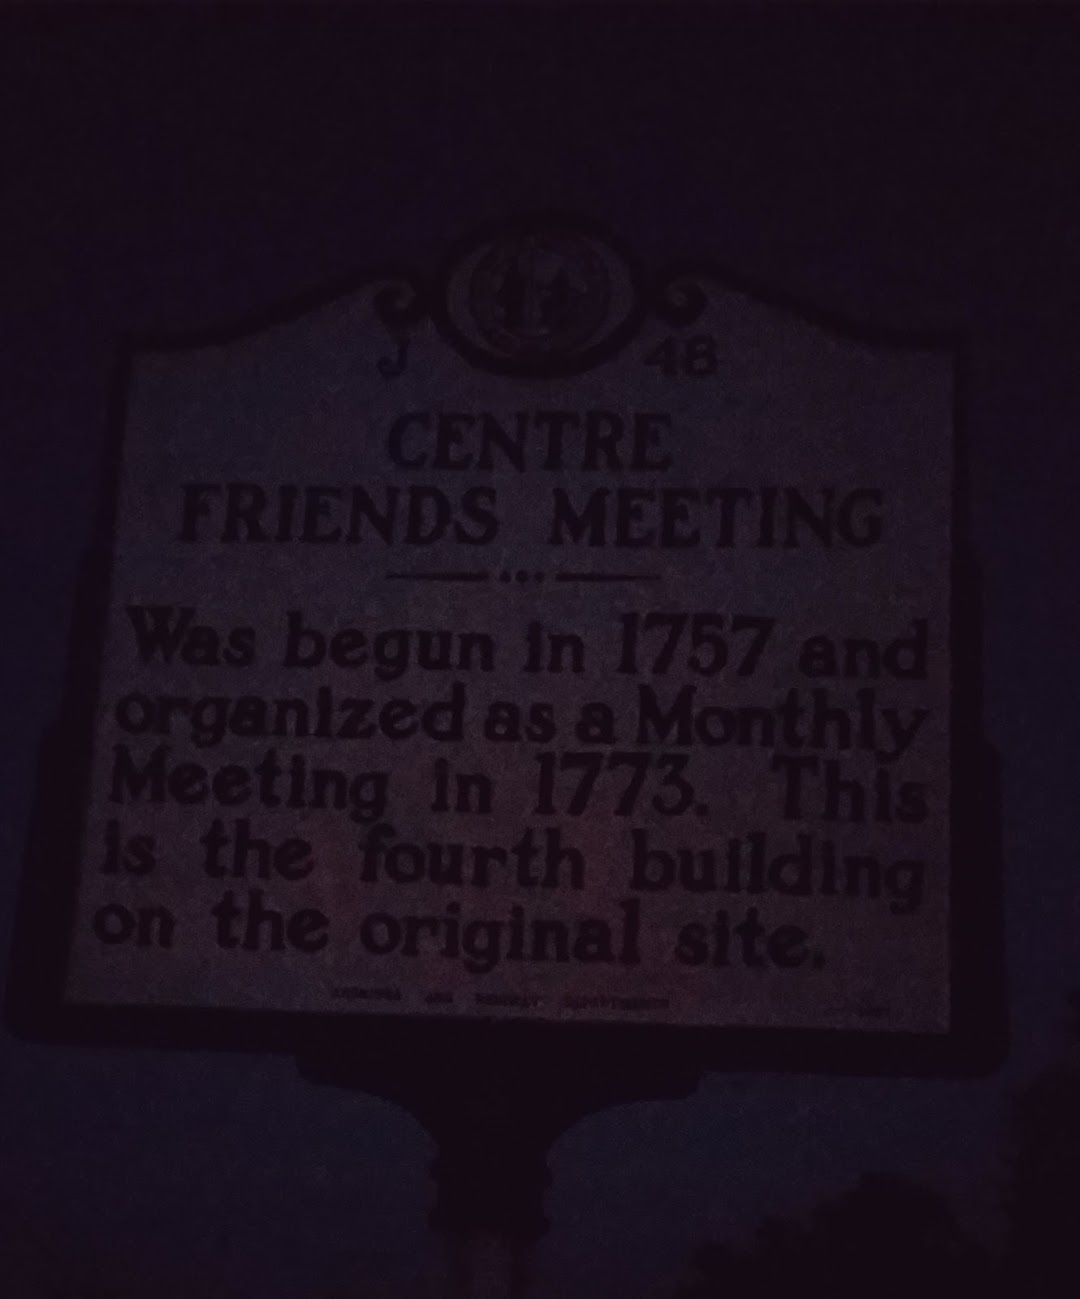 Center Friends Meeting historic marker